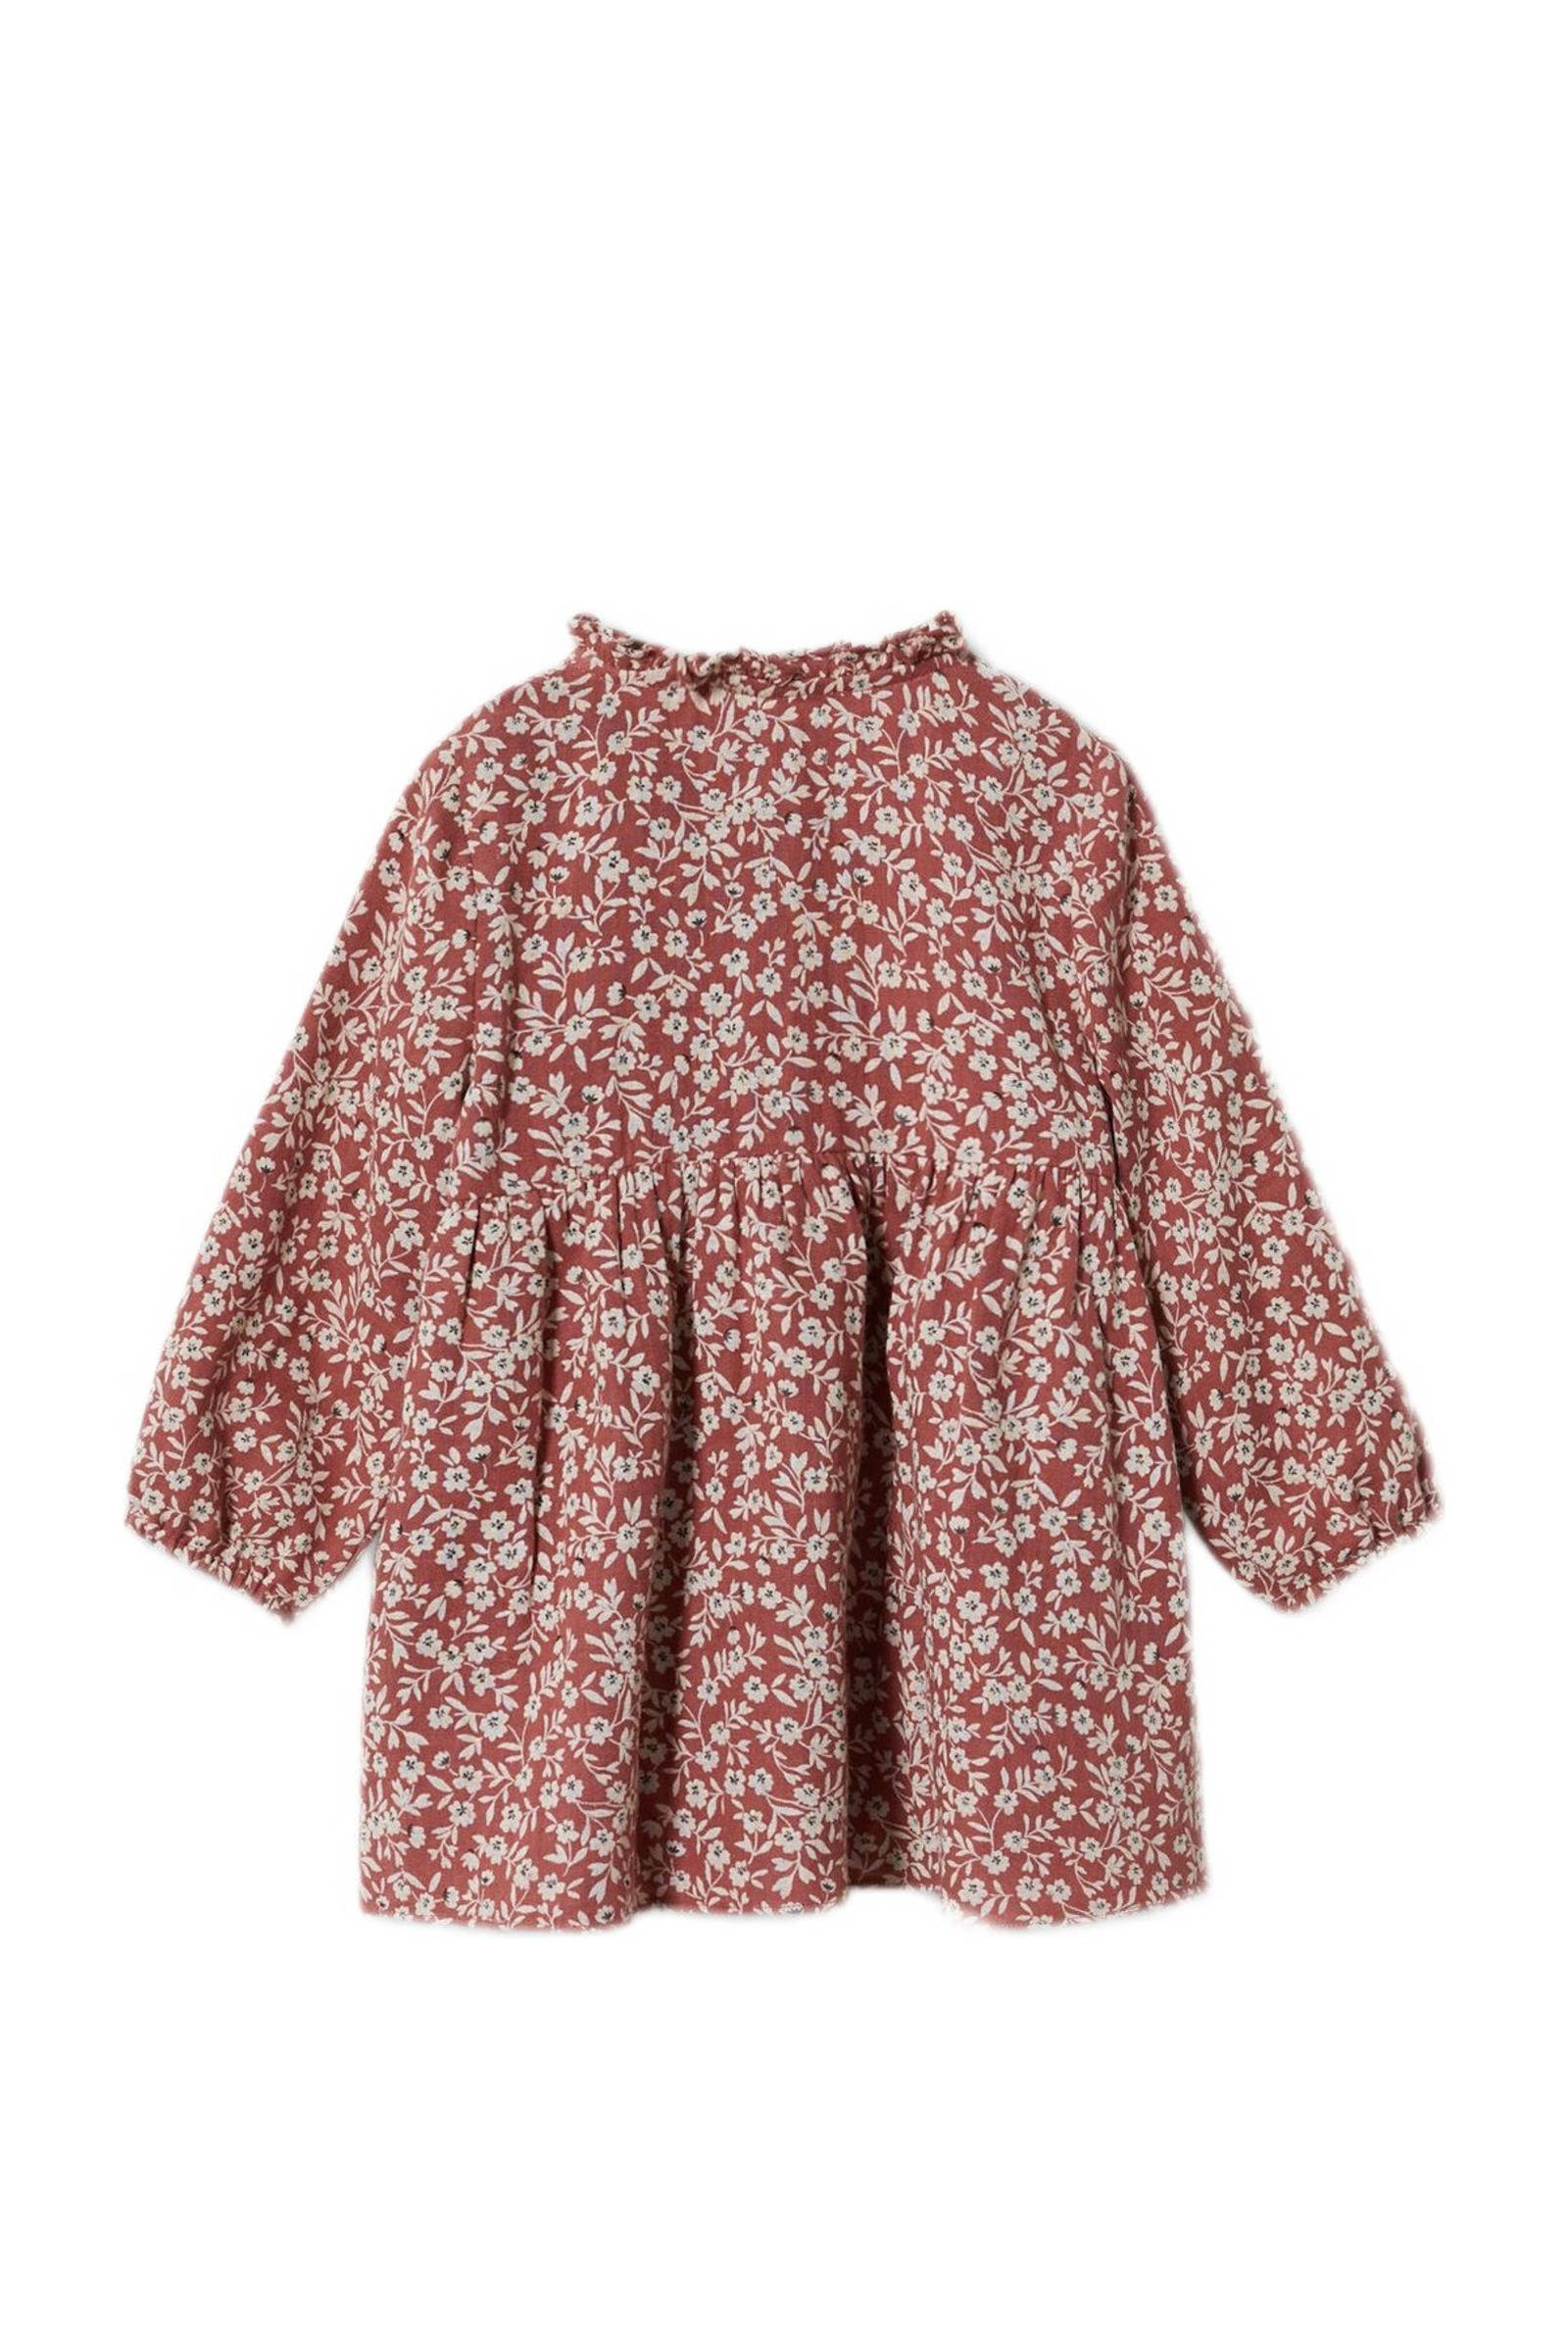 Size 2 White Organza and Pink Check Cotton Trim Toddler Pinafore Dress 999494330 Kleding Meisjeskleding Babykleding voor meisjes Jurken 